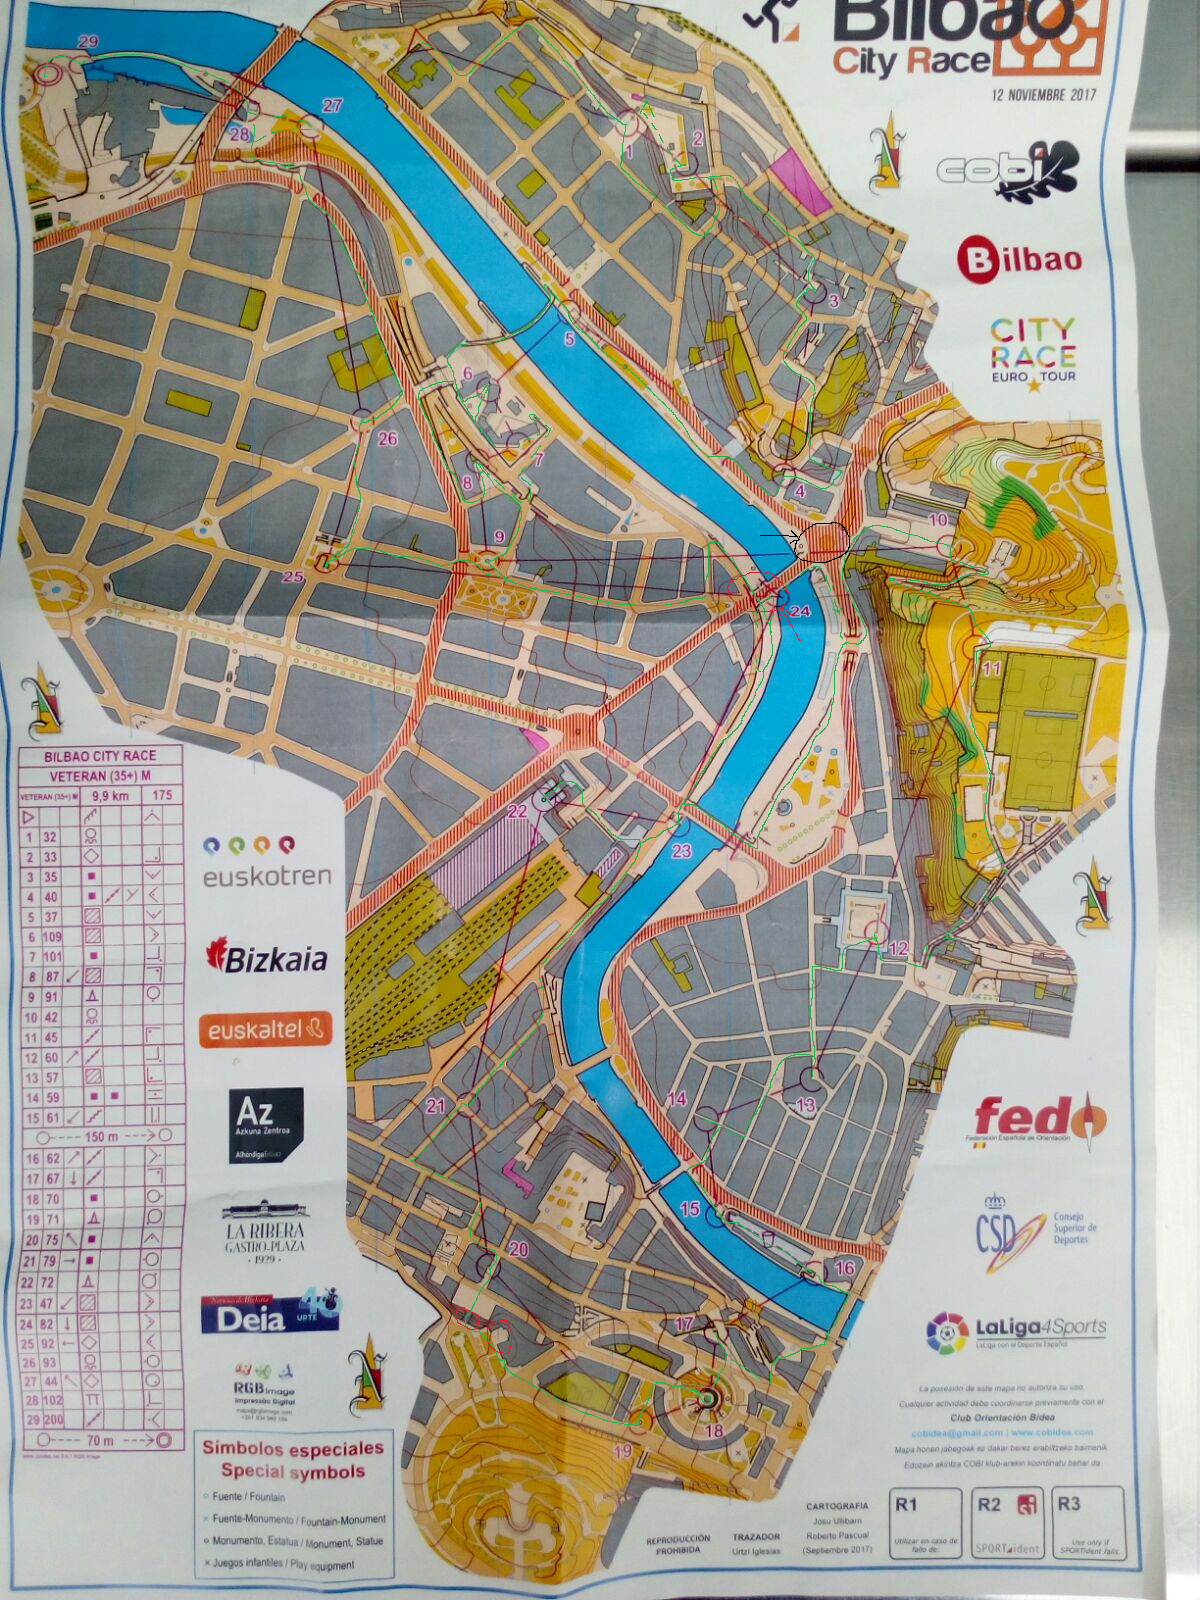 Bilbao City Race (2017-11-16)